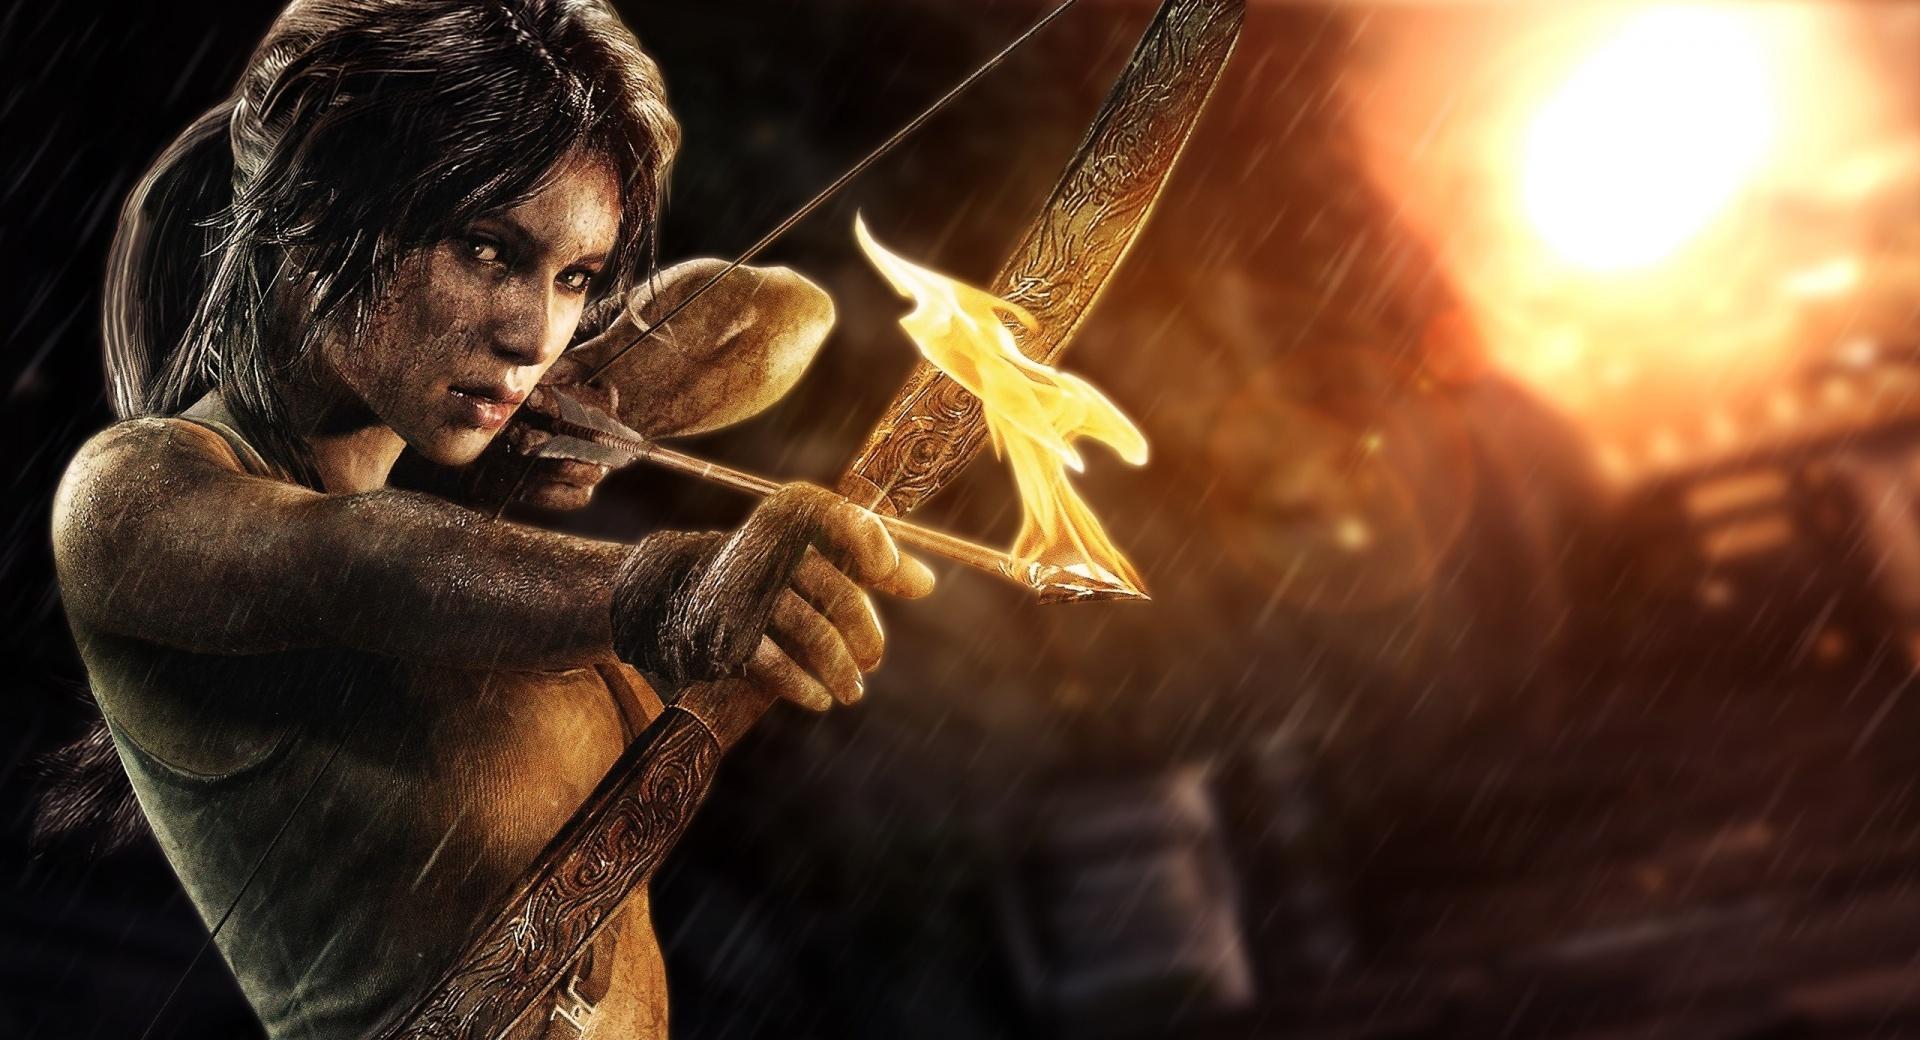 Lara Croft Bow and Arrow at 1024 x 1024 iPad size wallpapers HD quality